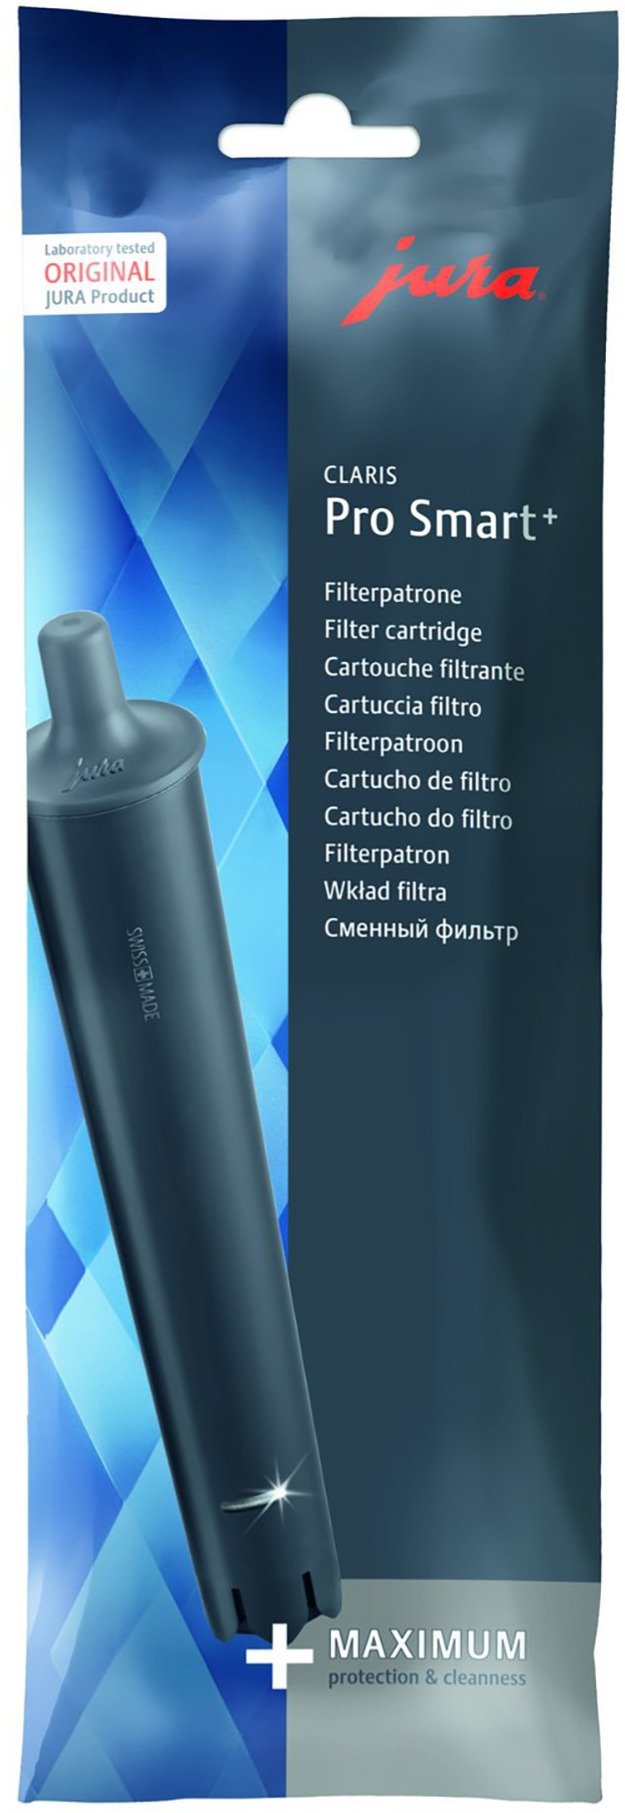 CLARIS Smart+ filter cartridge - JURA Australia